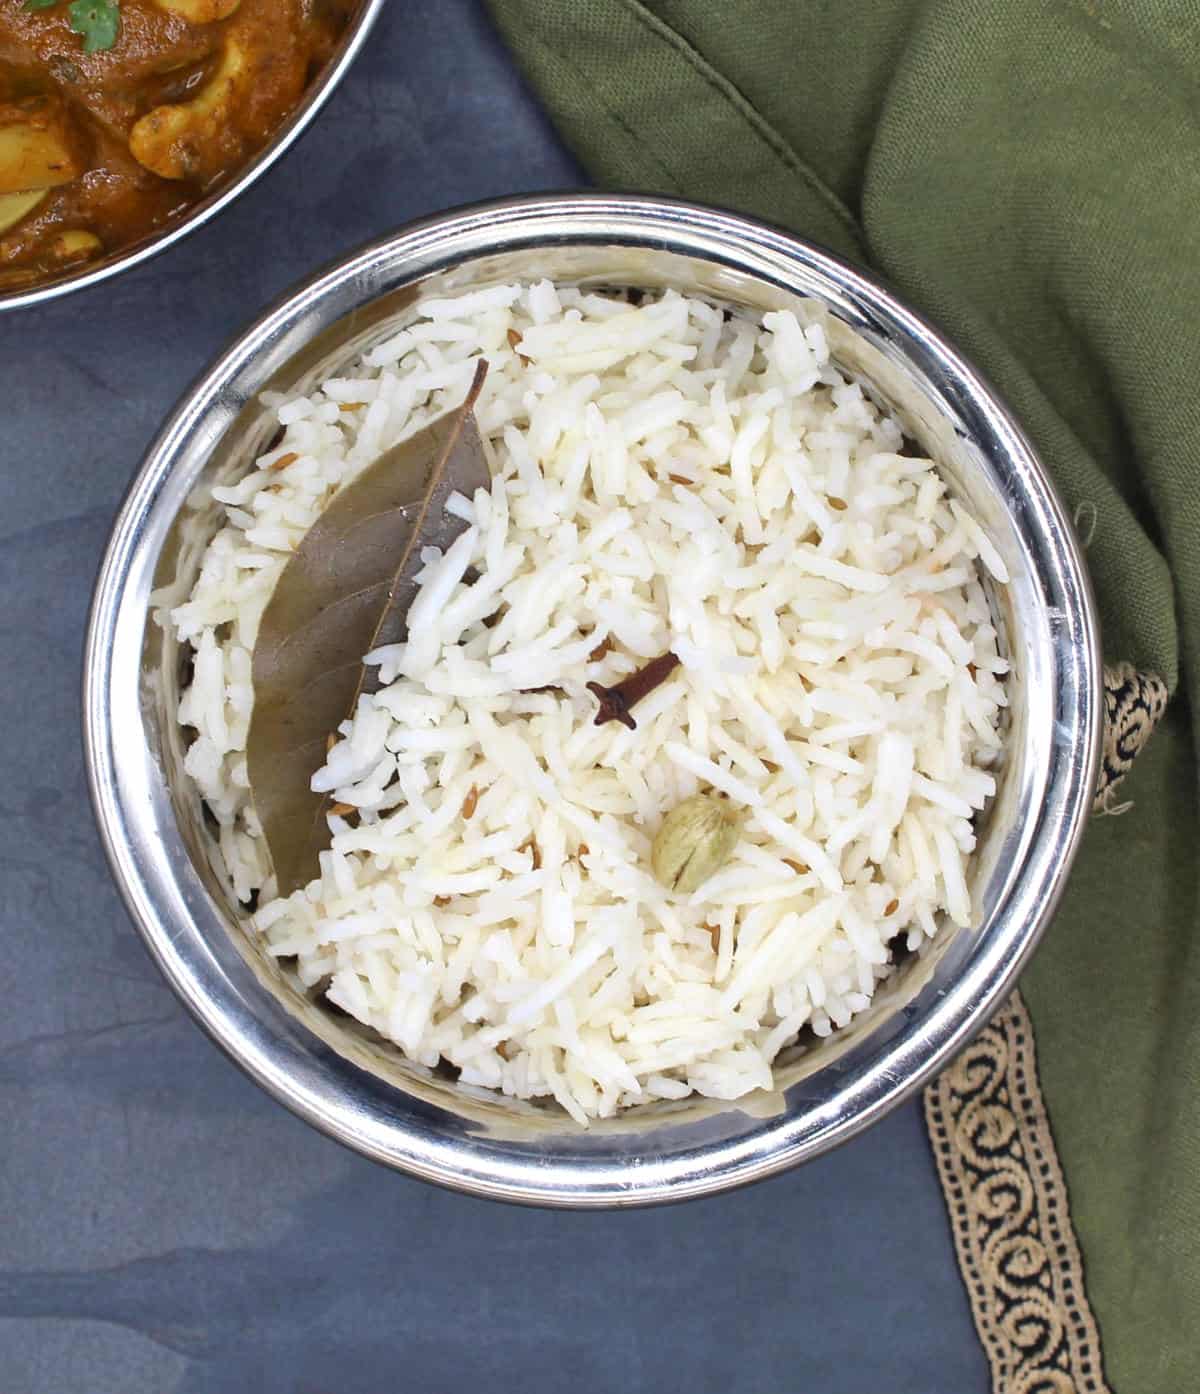 Photo of basmati rice in bowl.